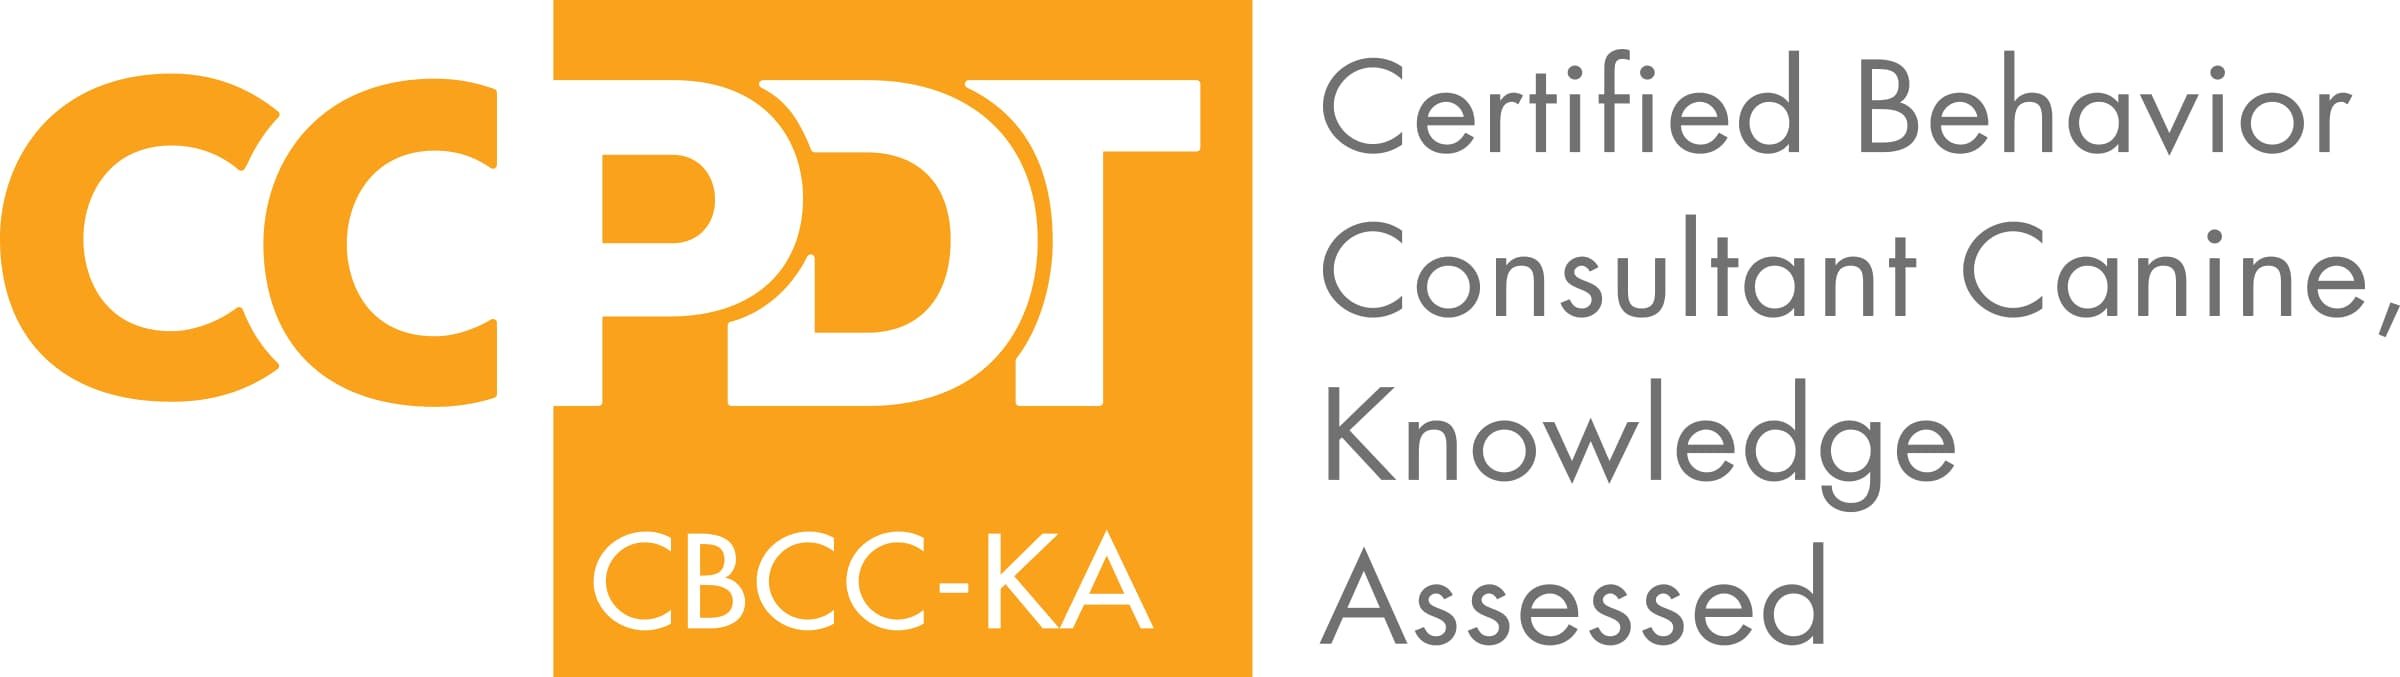 CCPDT Certified